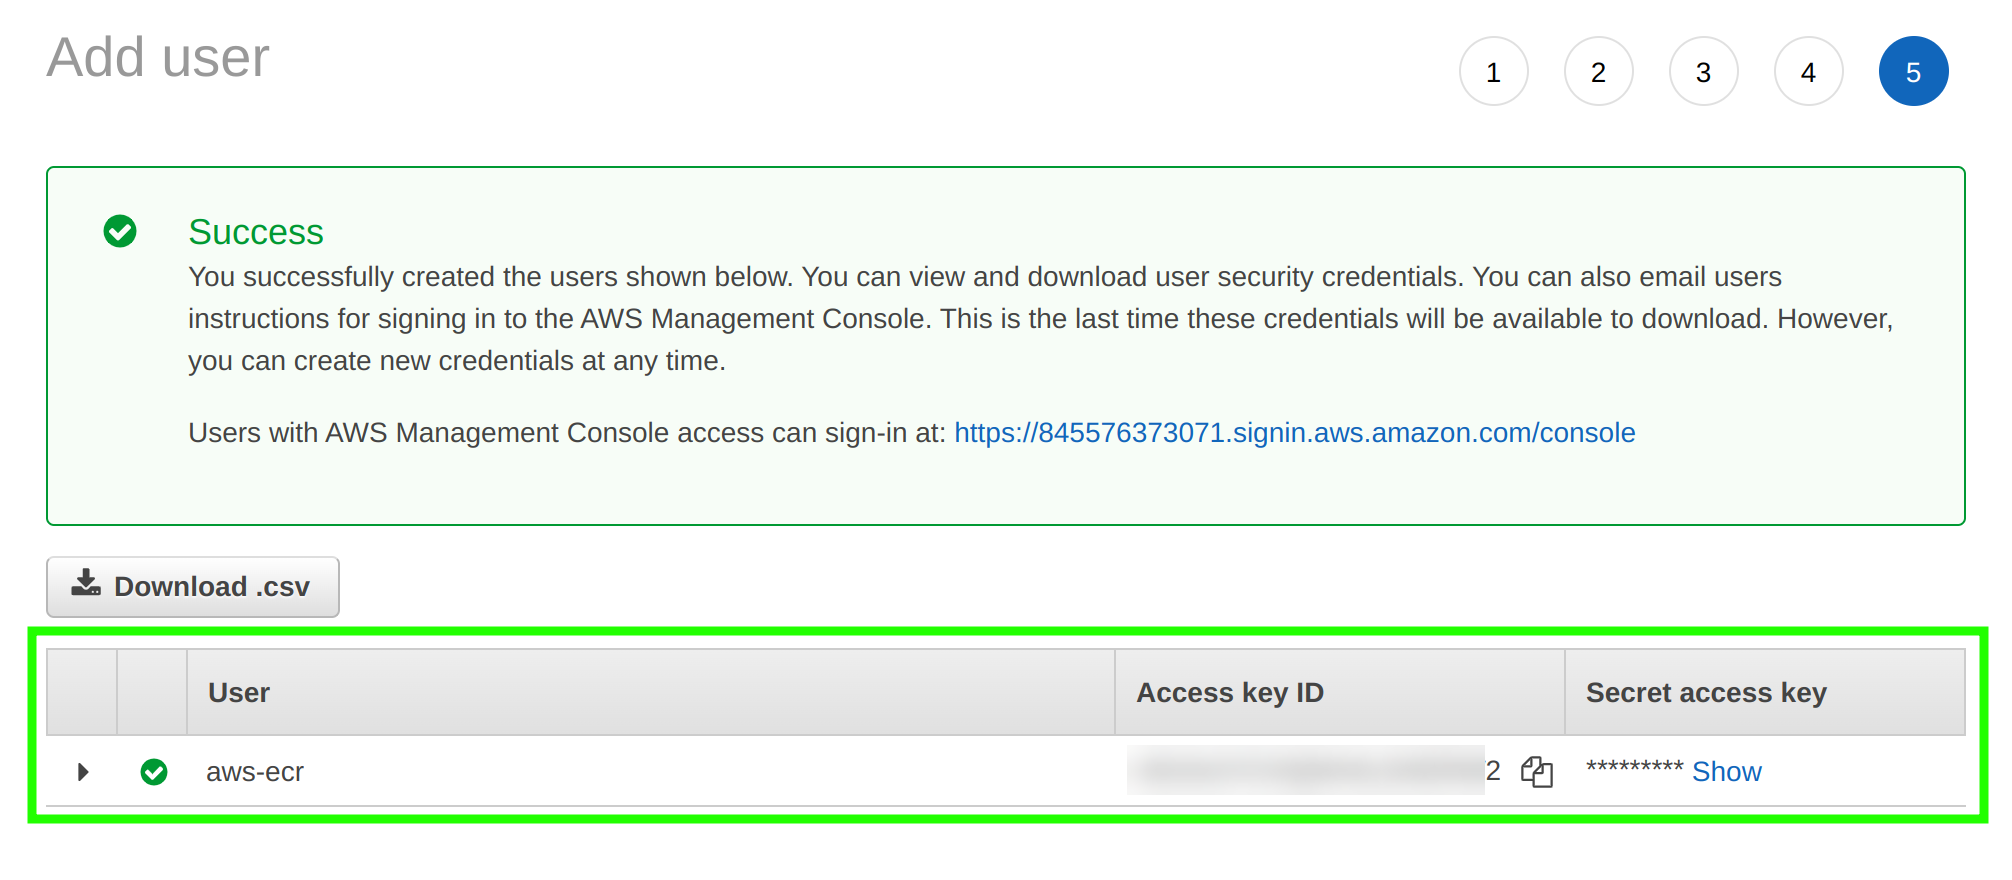 Accessing user security credentials